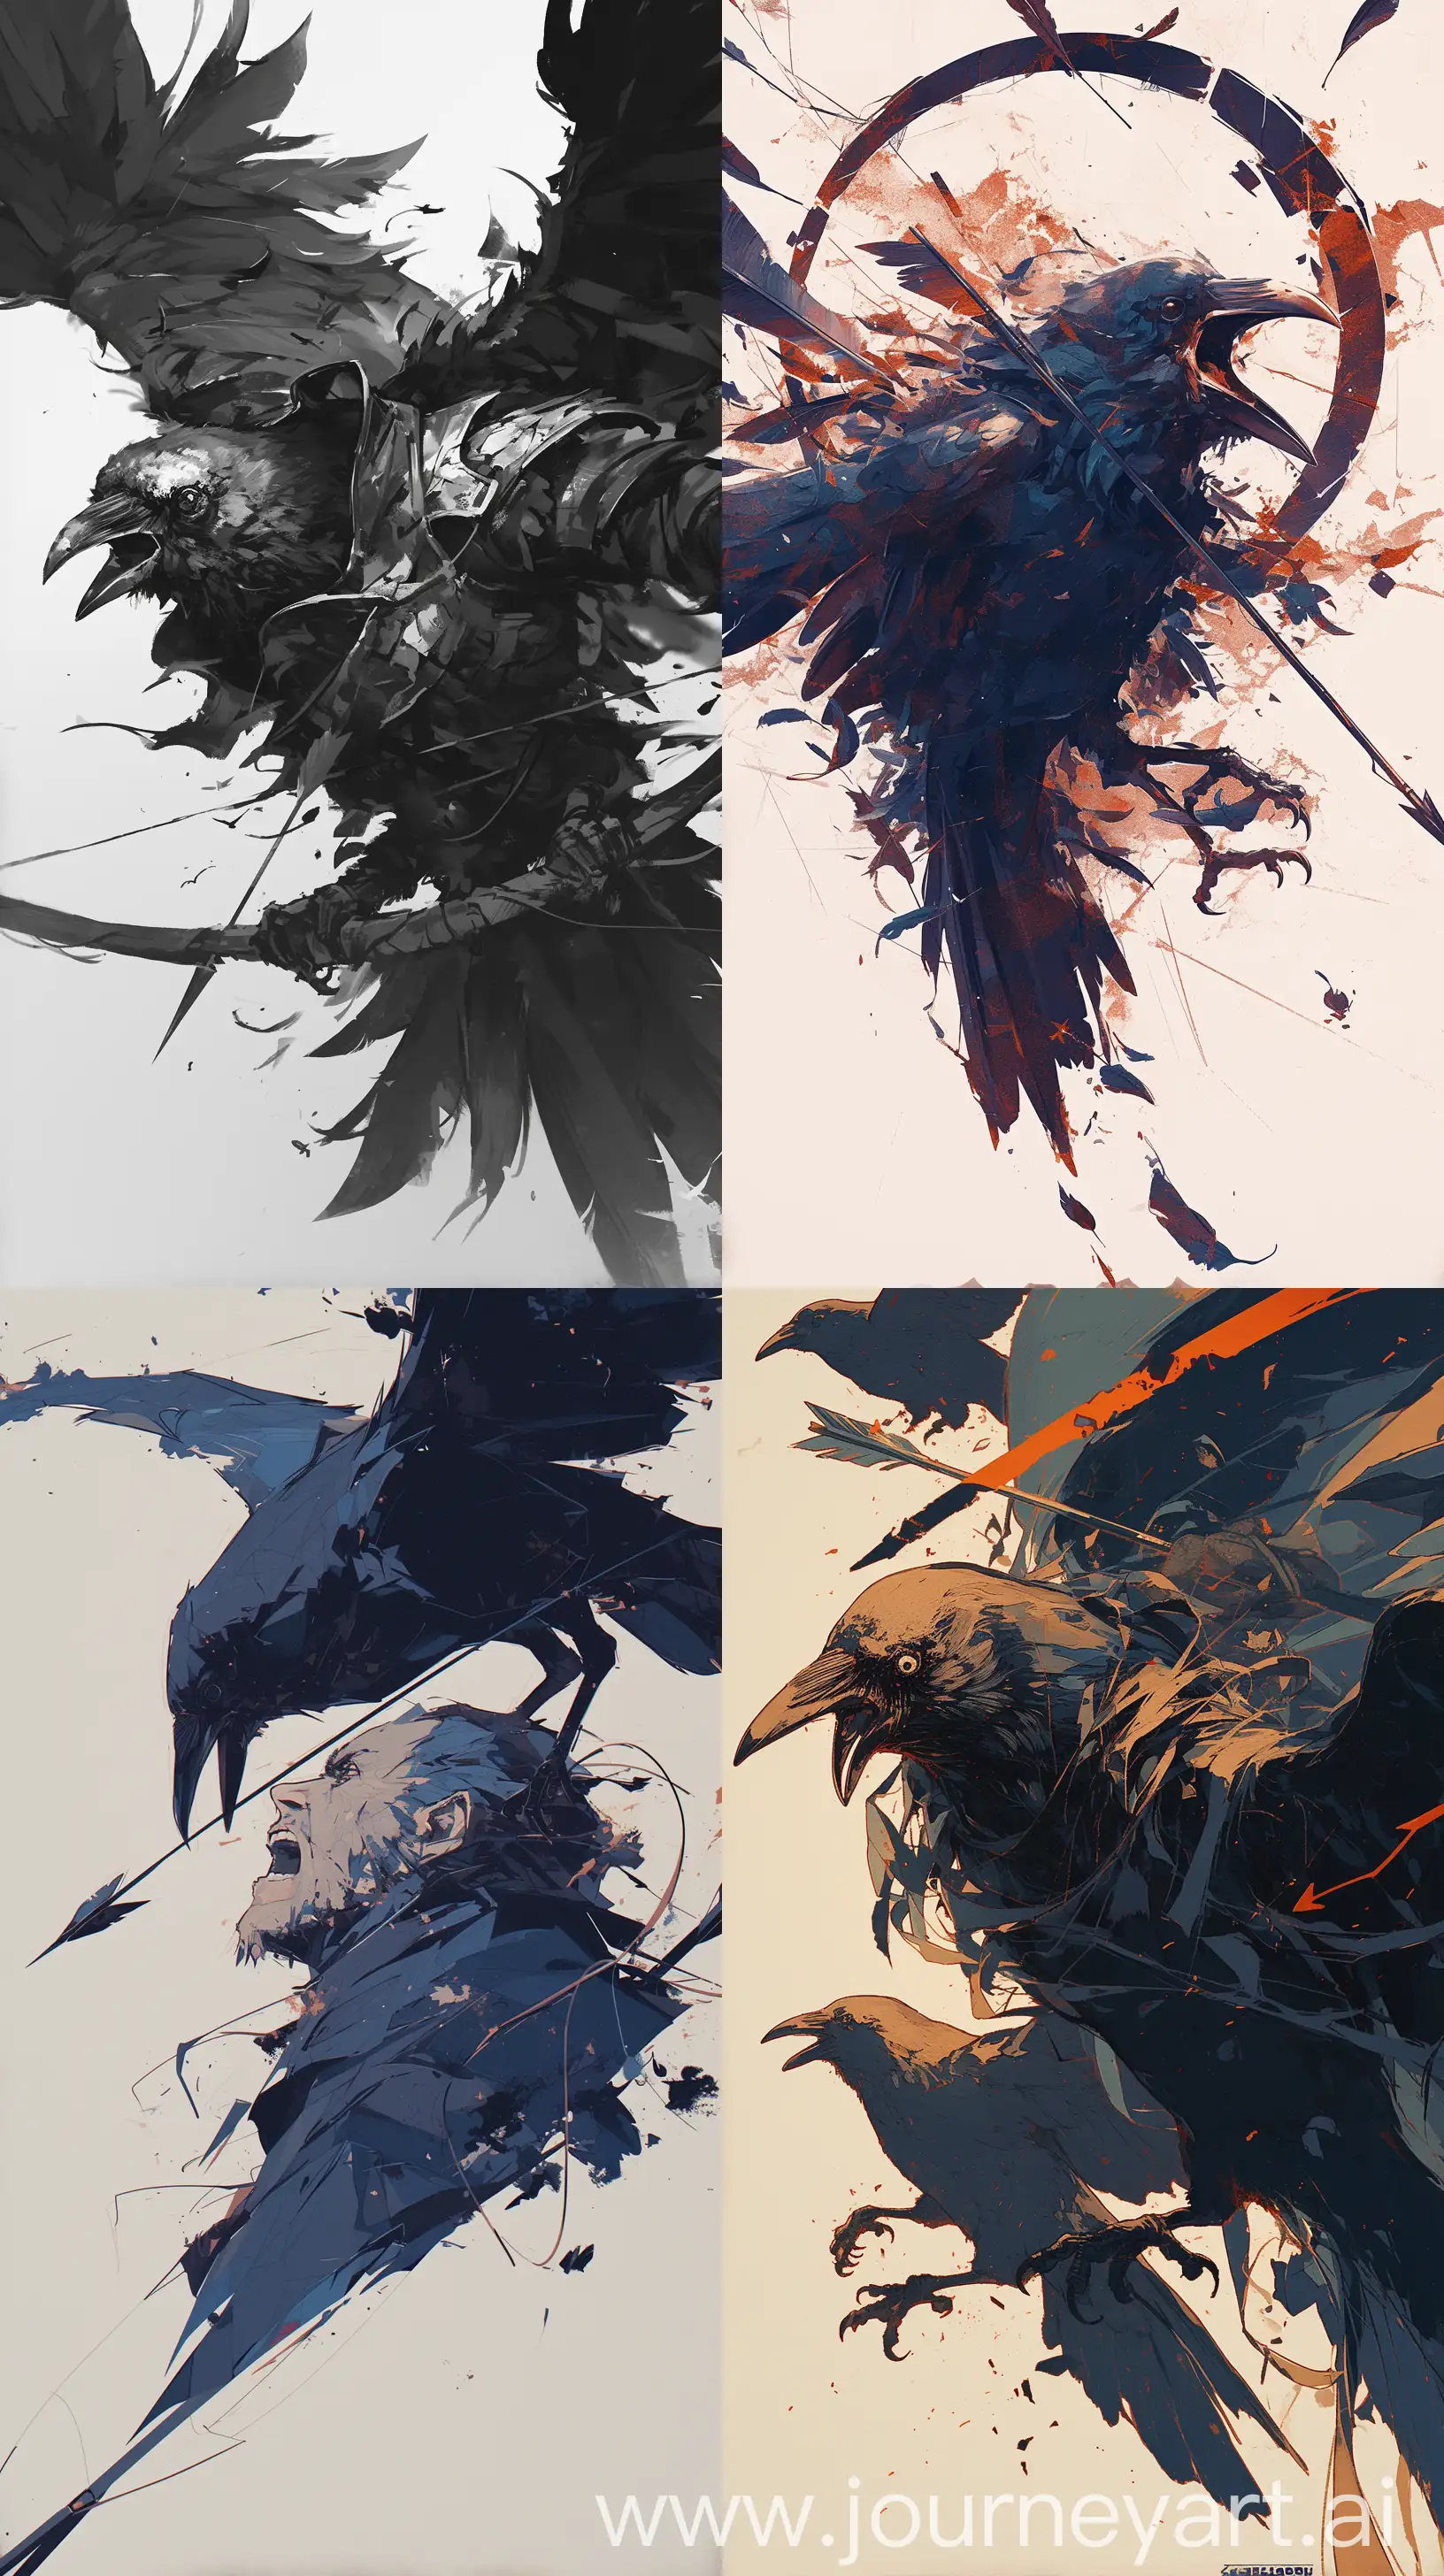 Terrified-Crow-Fleeing-from-Pursuing-Arrow-High-Resolution-Artwork